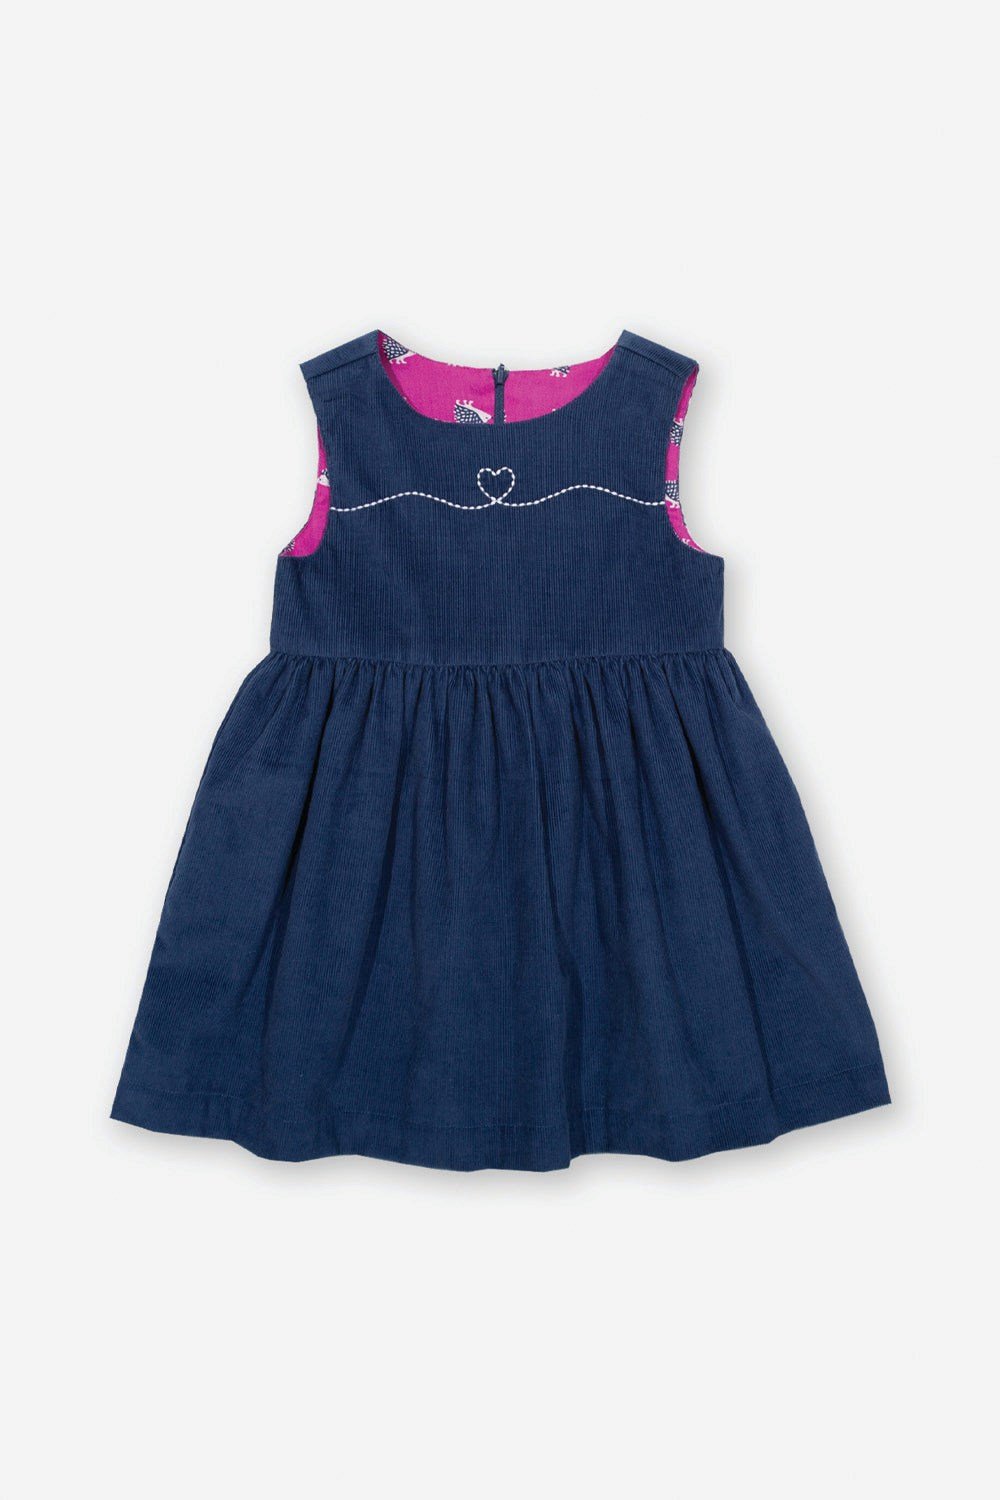 Hedgehog Heart Baby/Kids Reversible Dress -